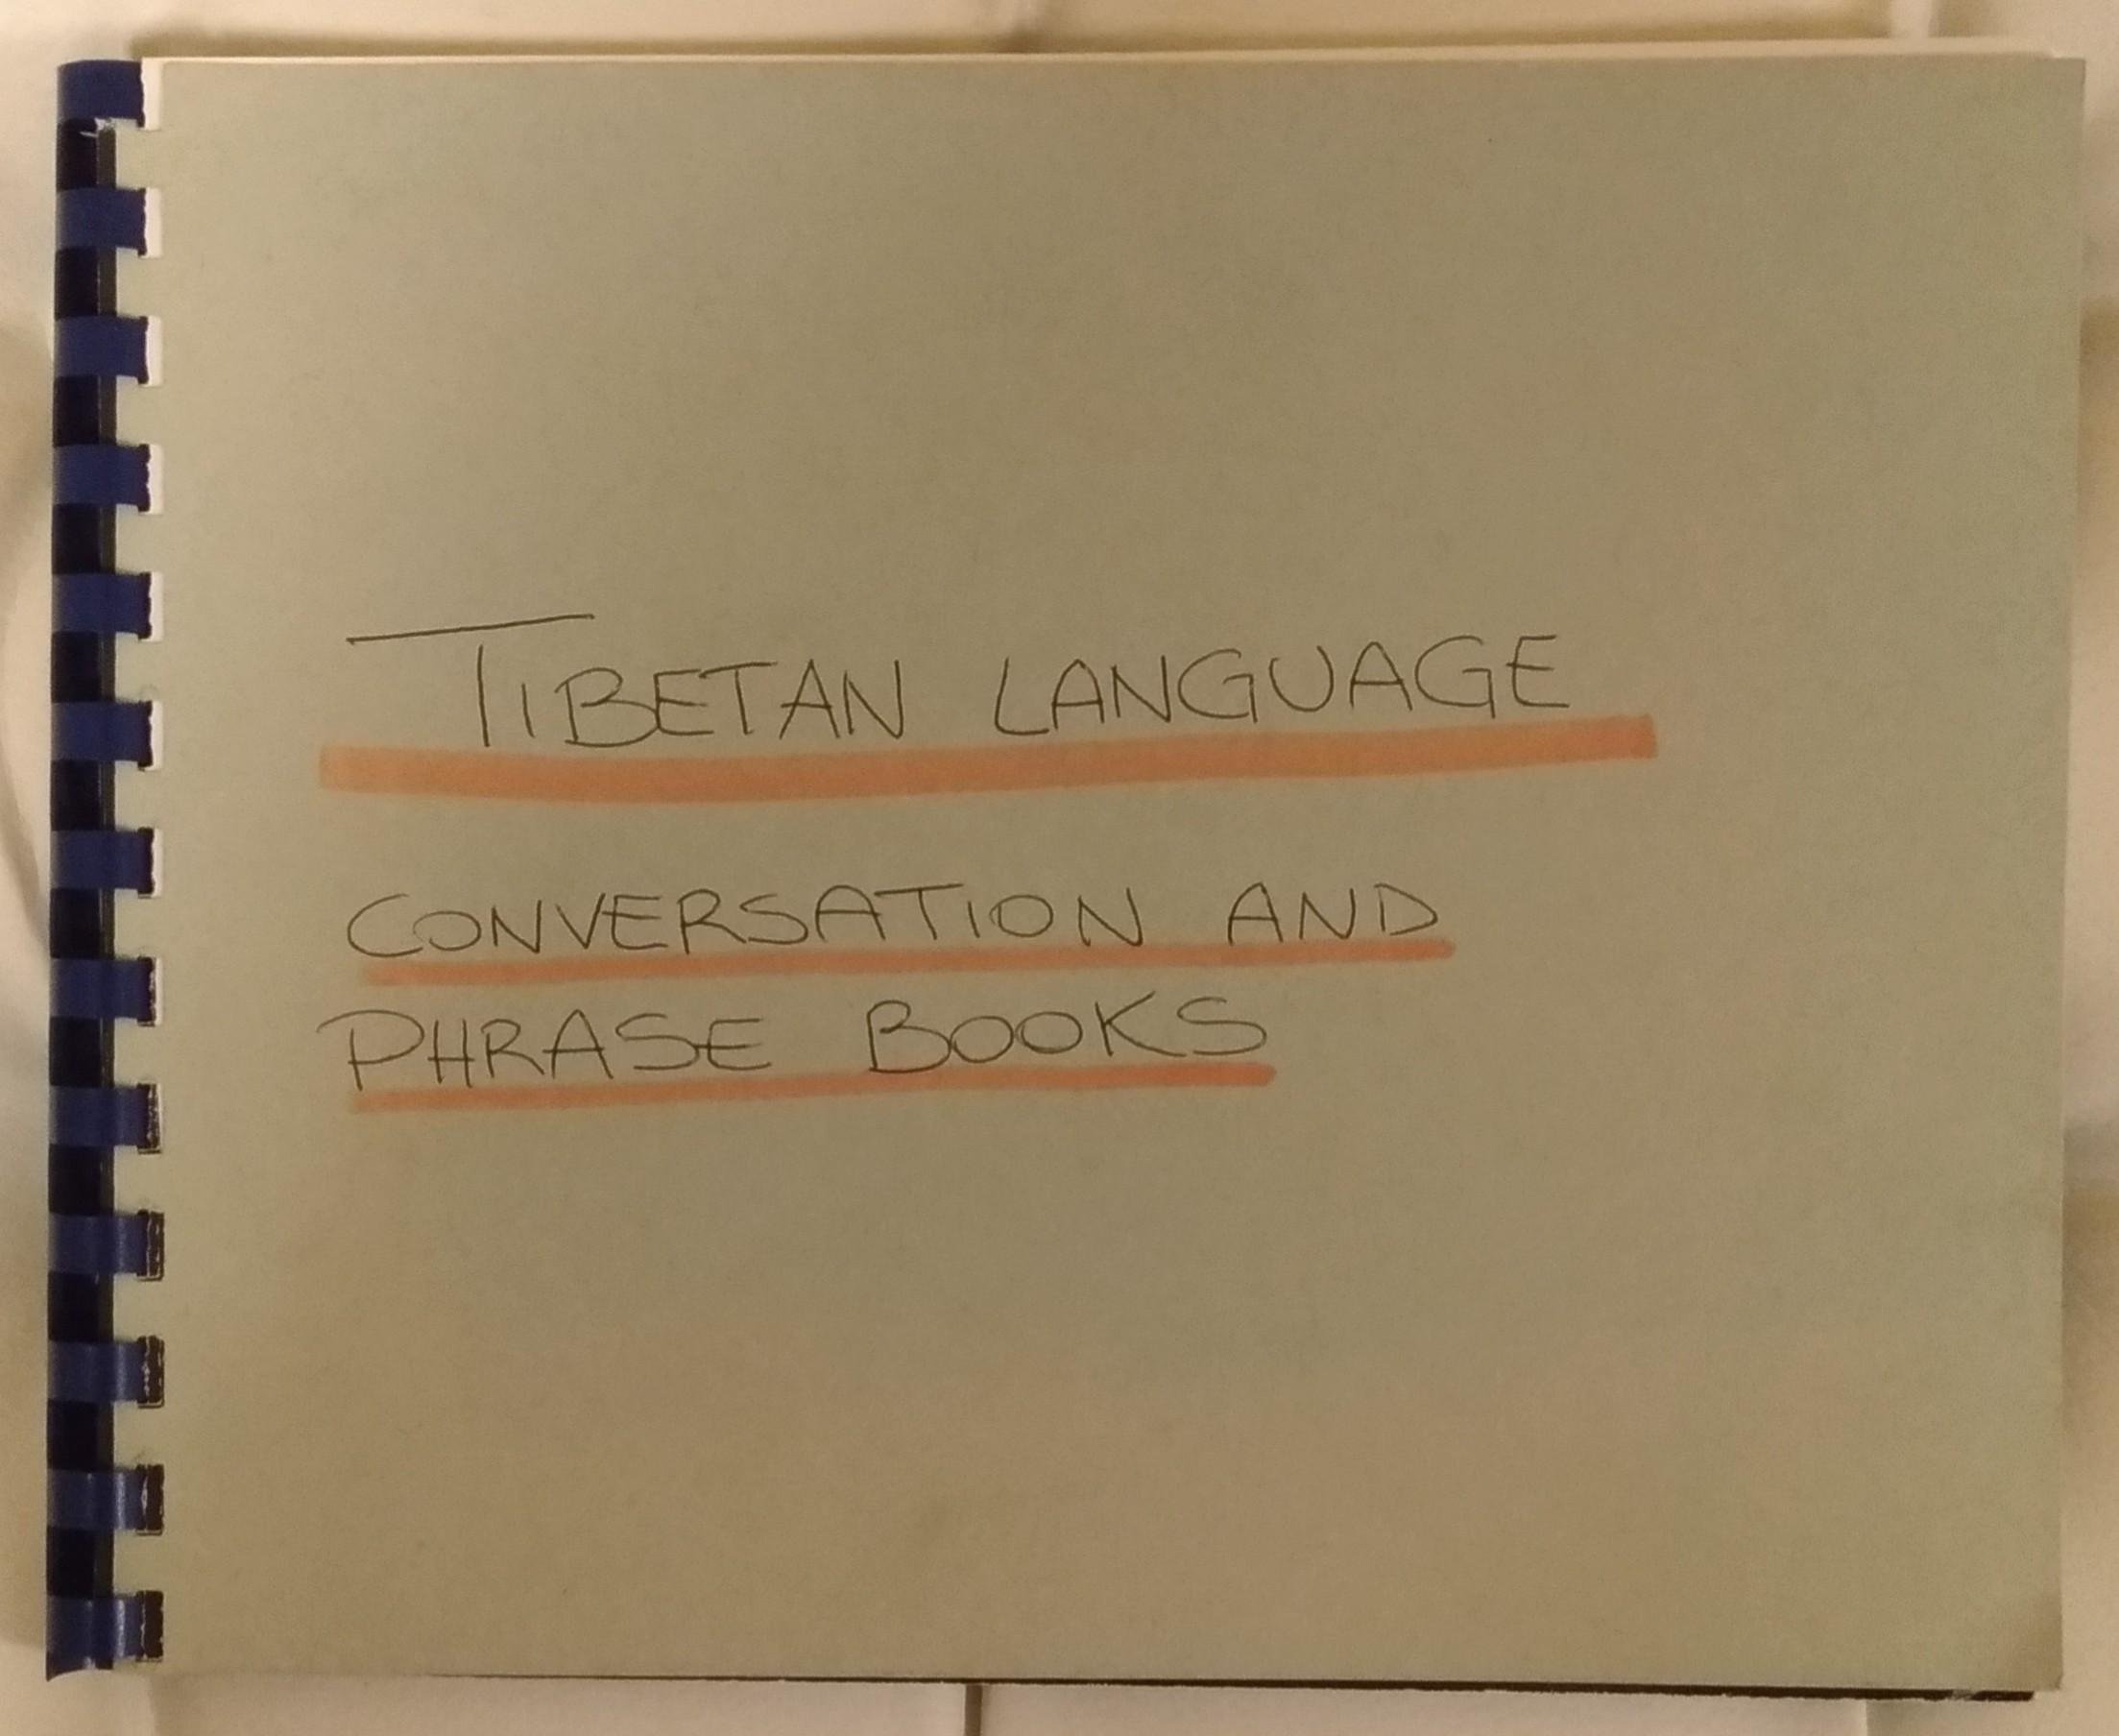 Tibetan language, conversation and phrase